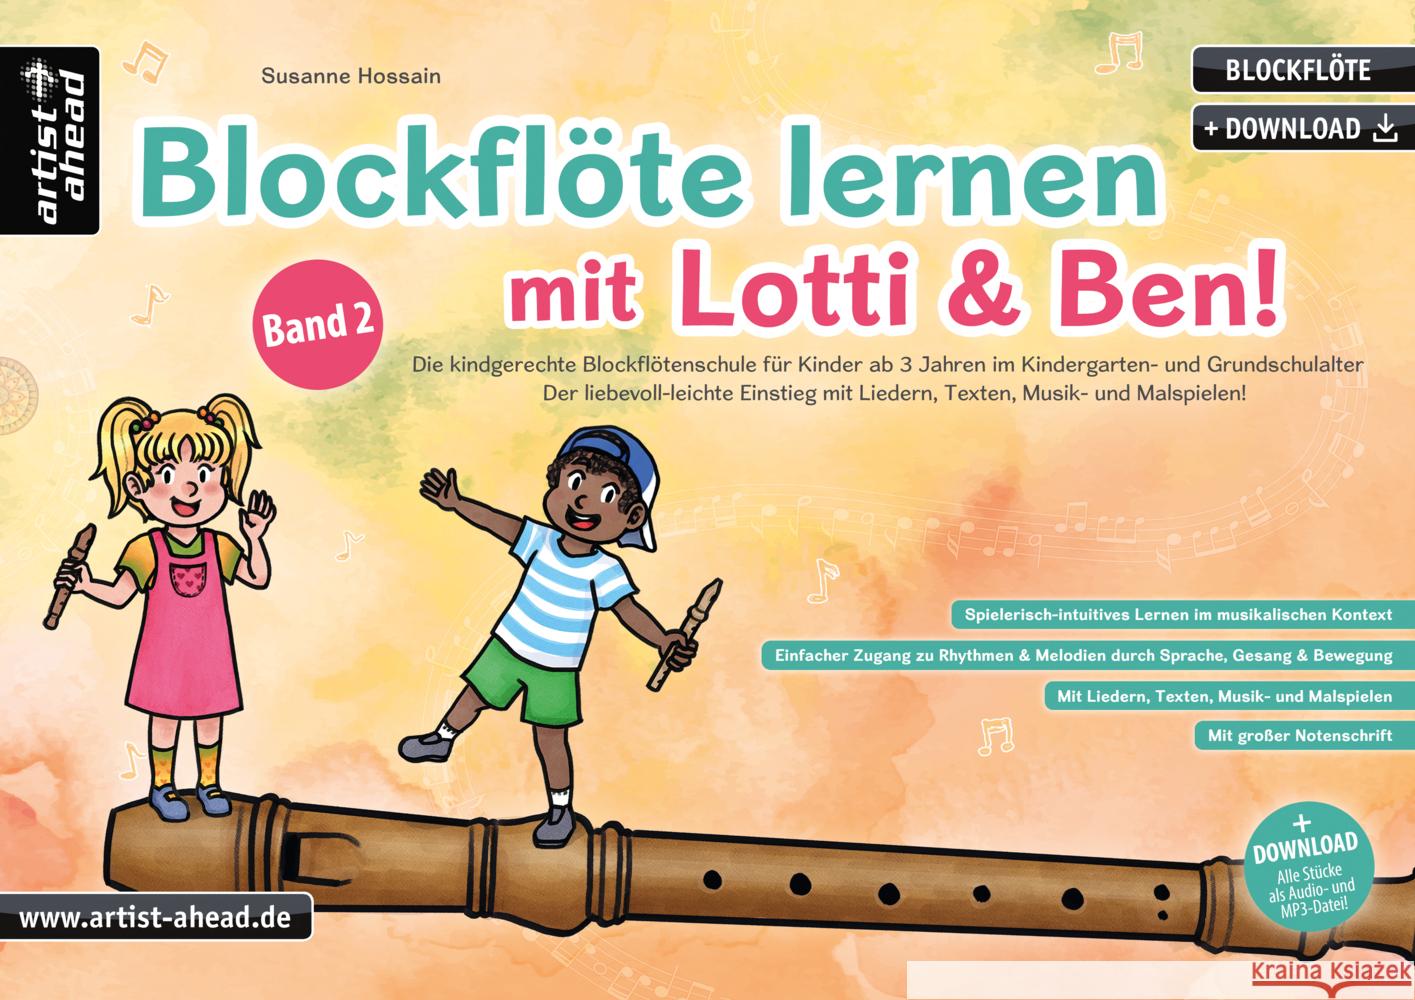 Blockflöte lernen mit Lotti & Ben - Band 2! Hossain, Susanne 9783866421837 artist ahead - książka